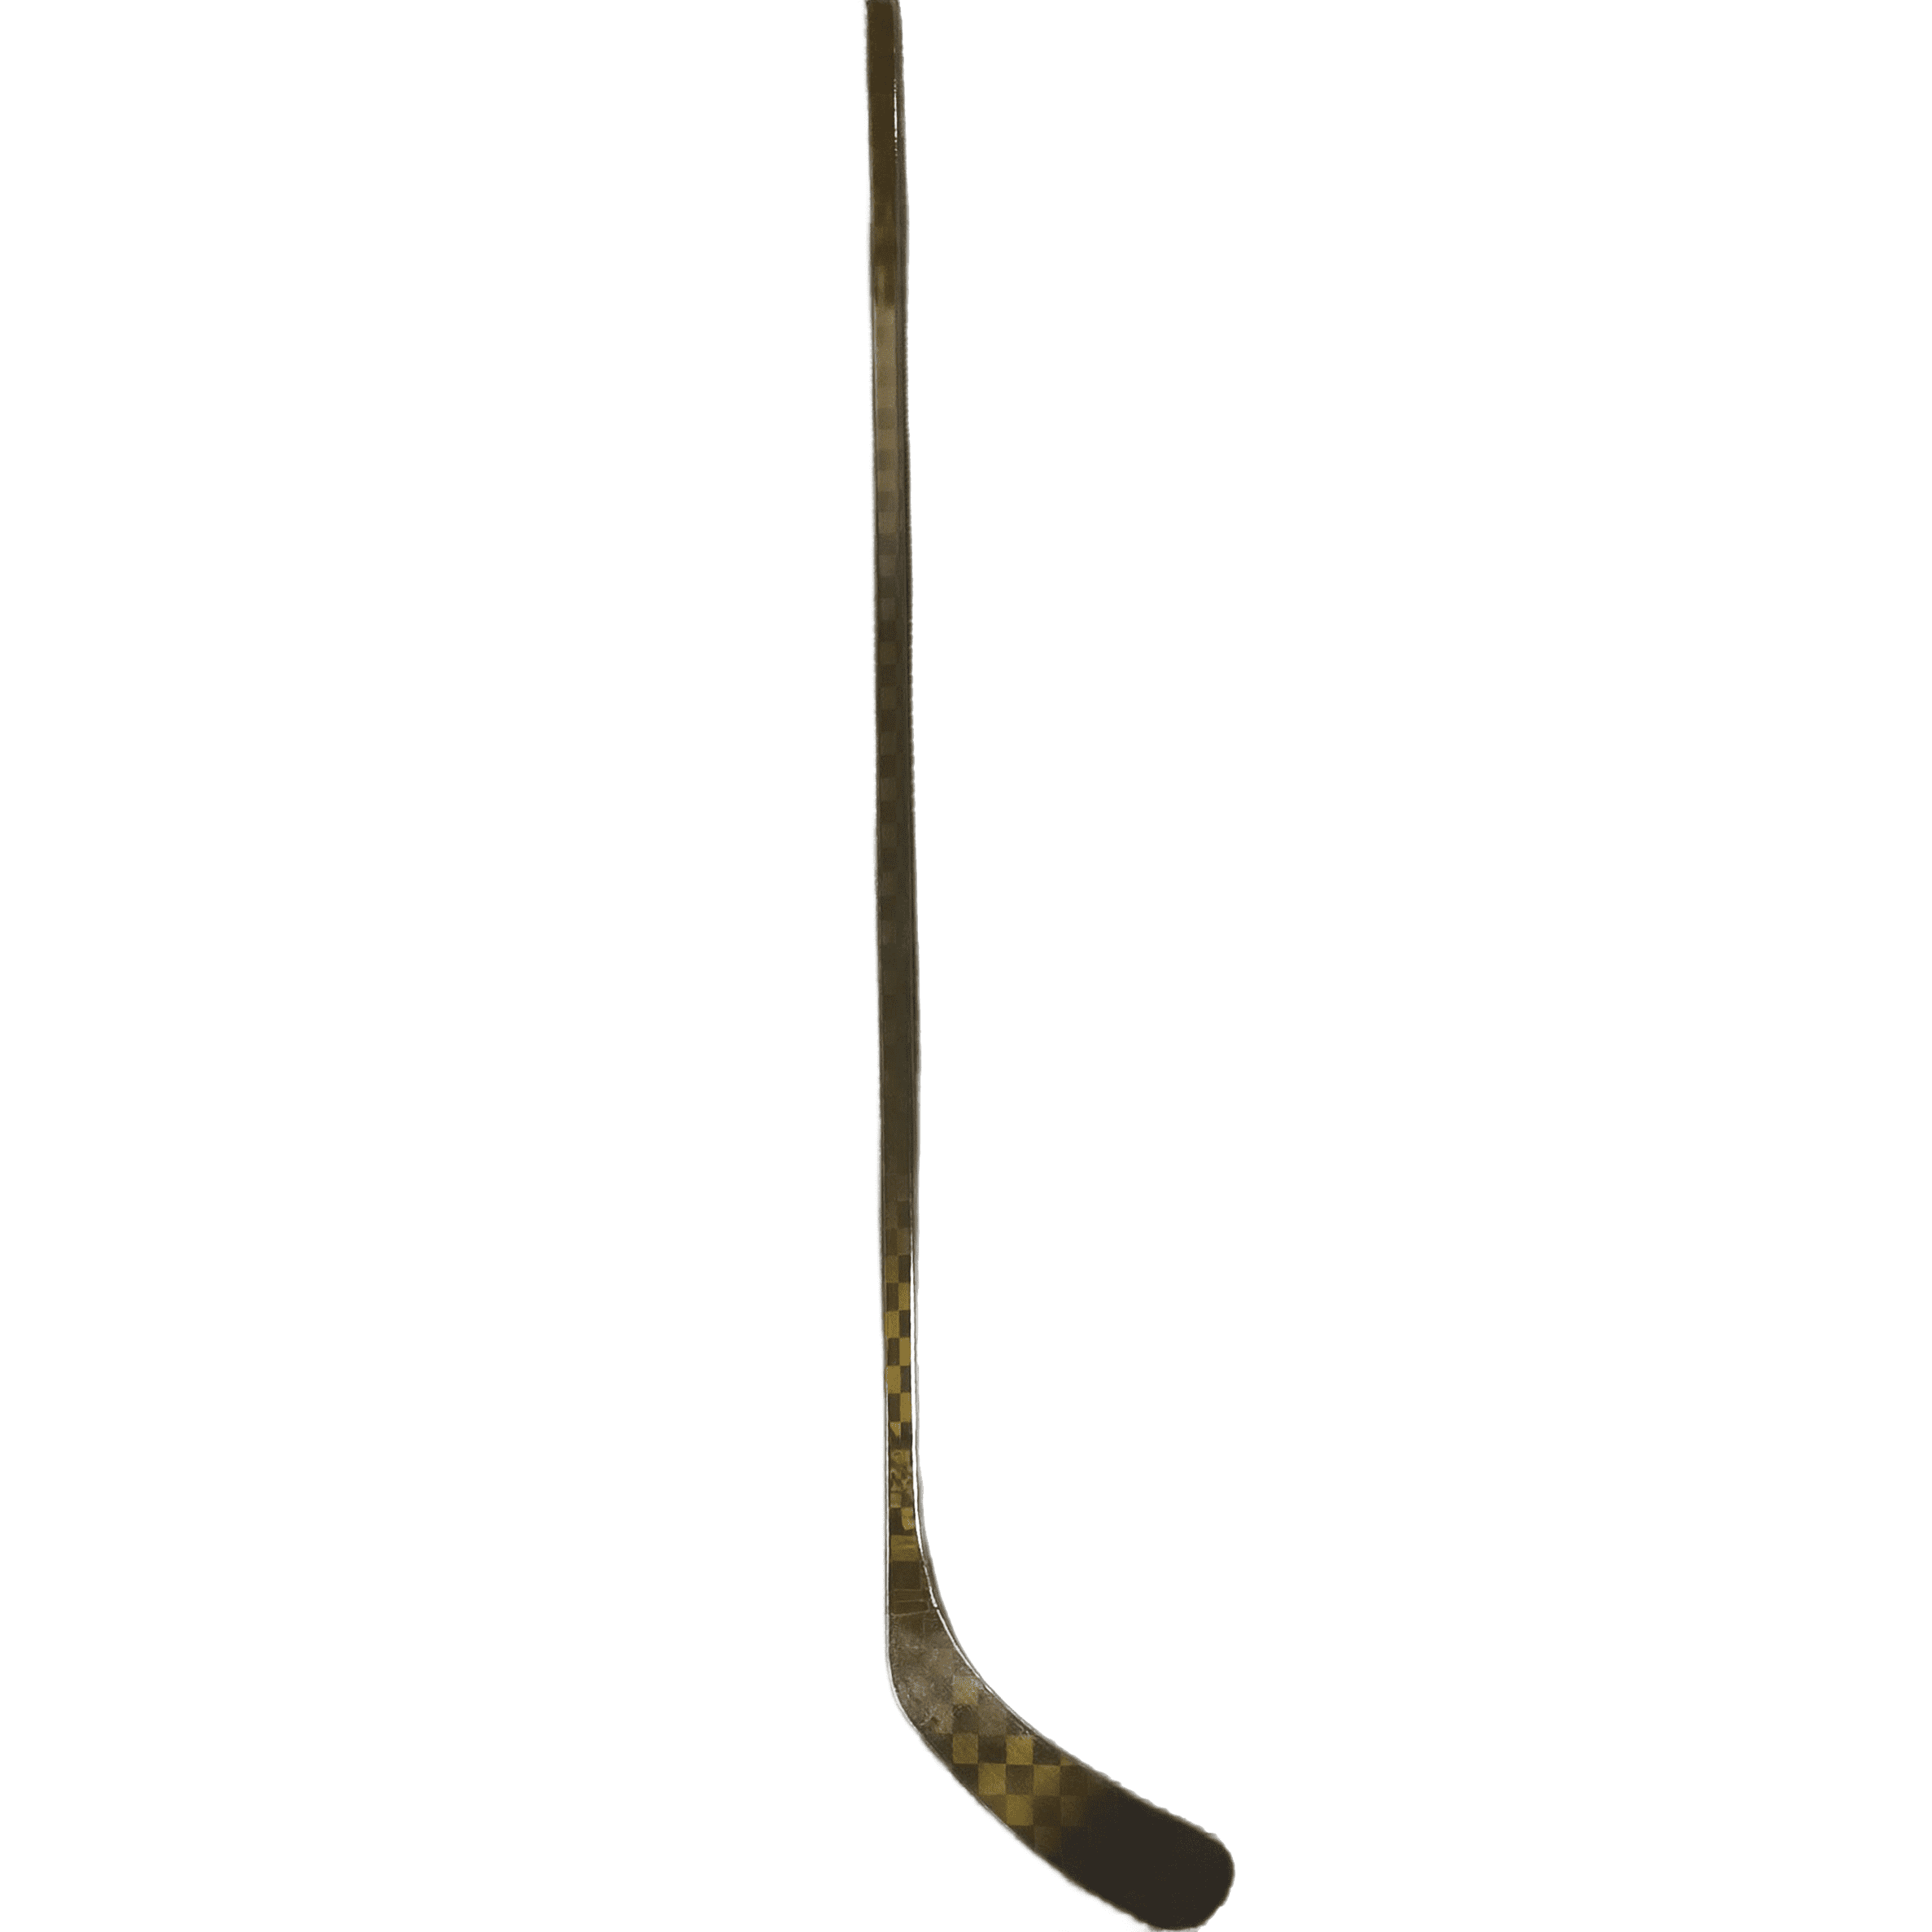 Customizable hockey sticks